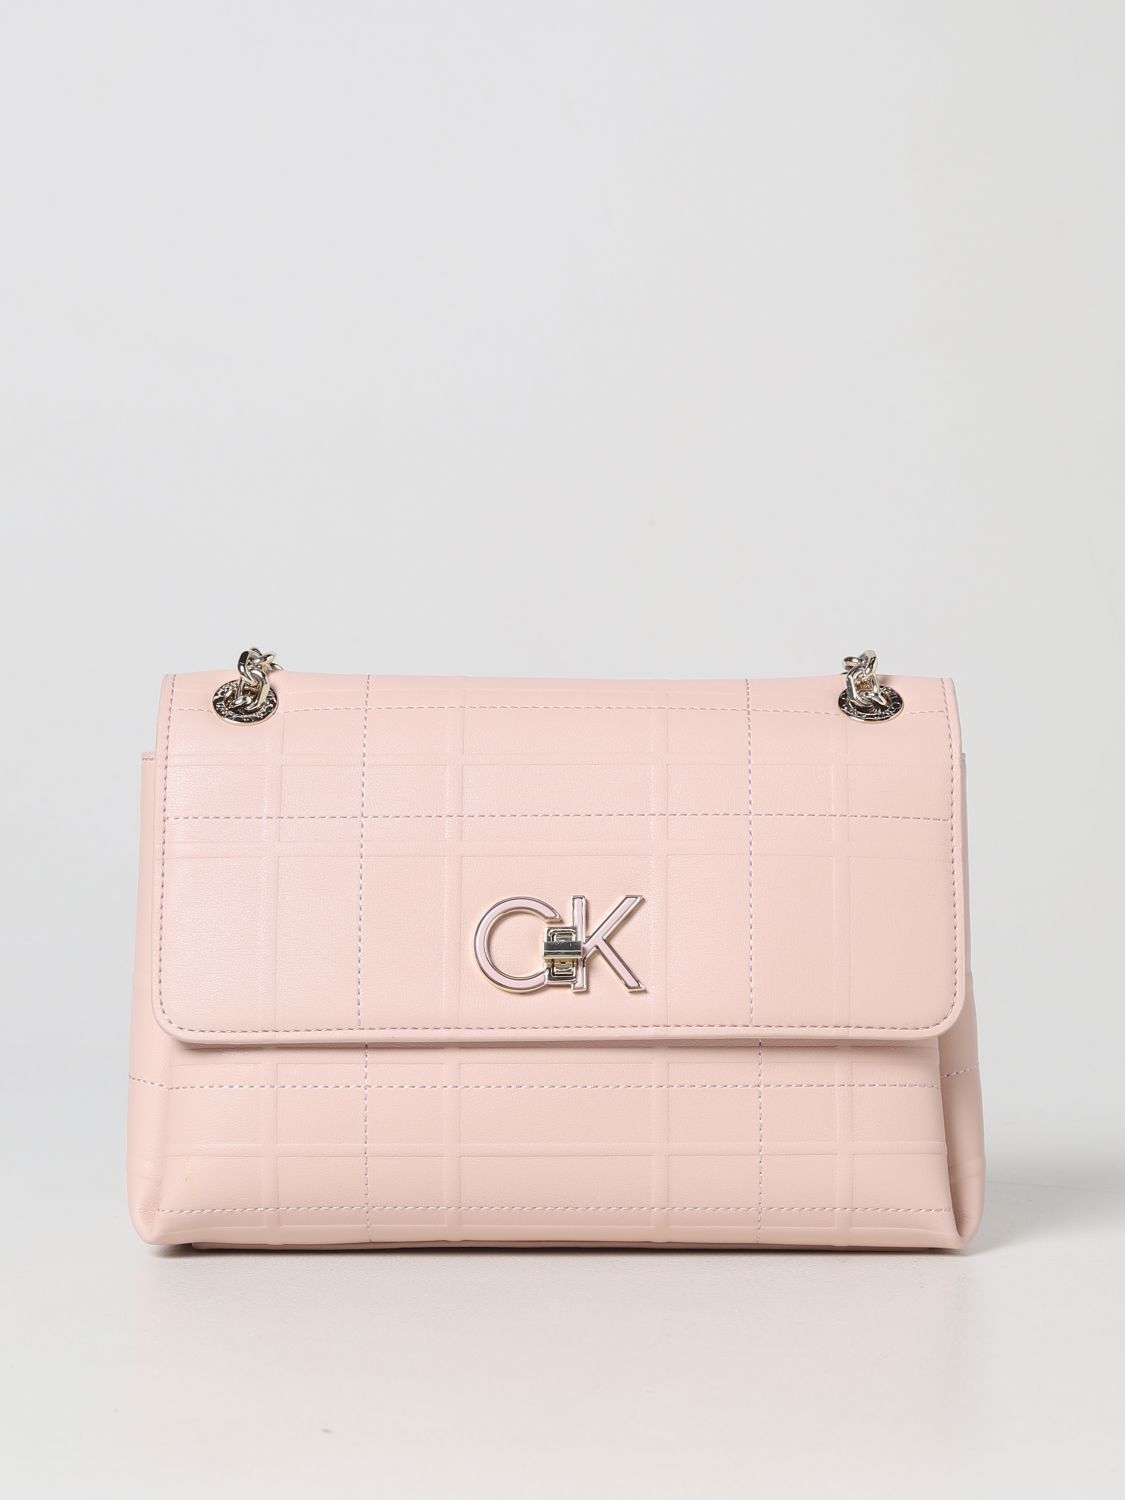 Calvin Klein handbag - brand new with tags | Calvin klein handbags, Branded  handbags, Handbag